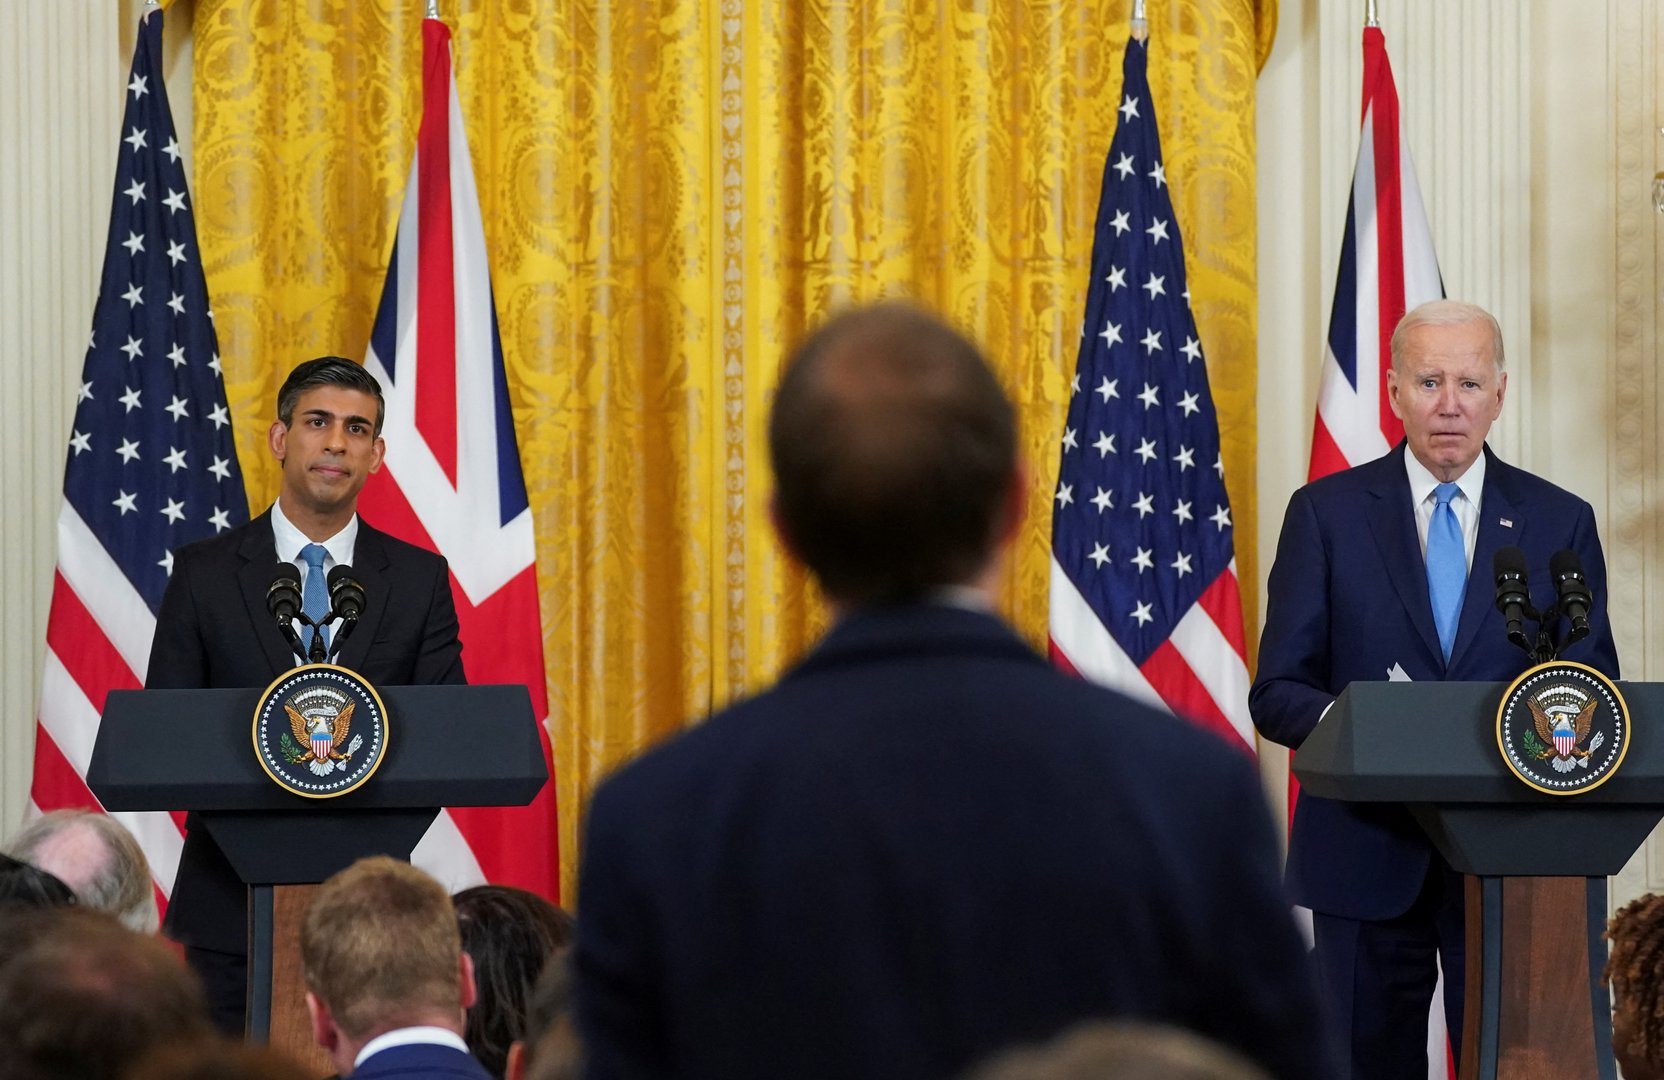 image Sunak, Biden sign new US-UK agreement on clean energy, AI